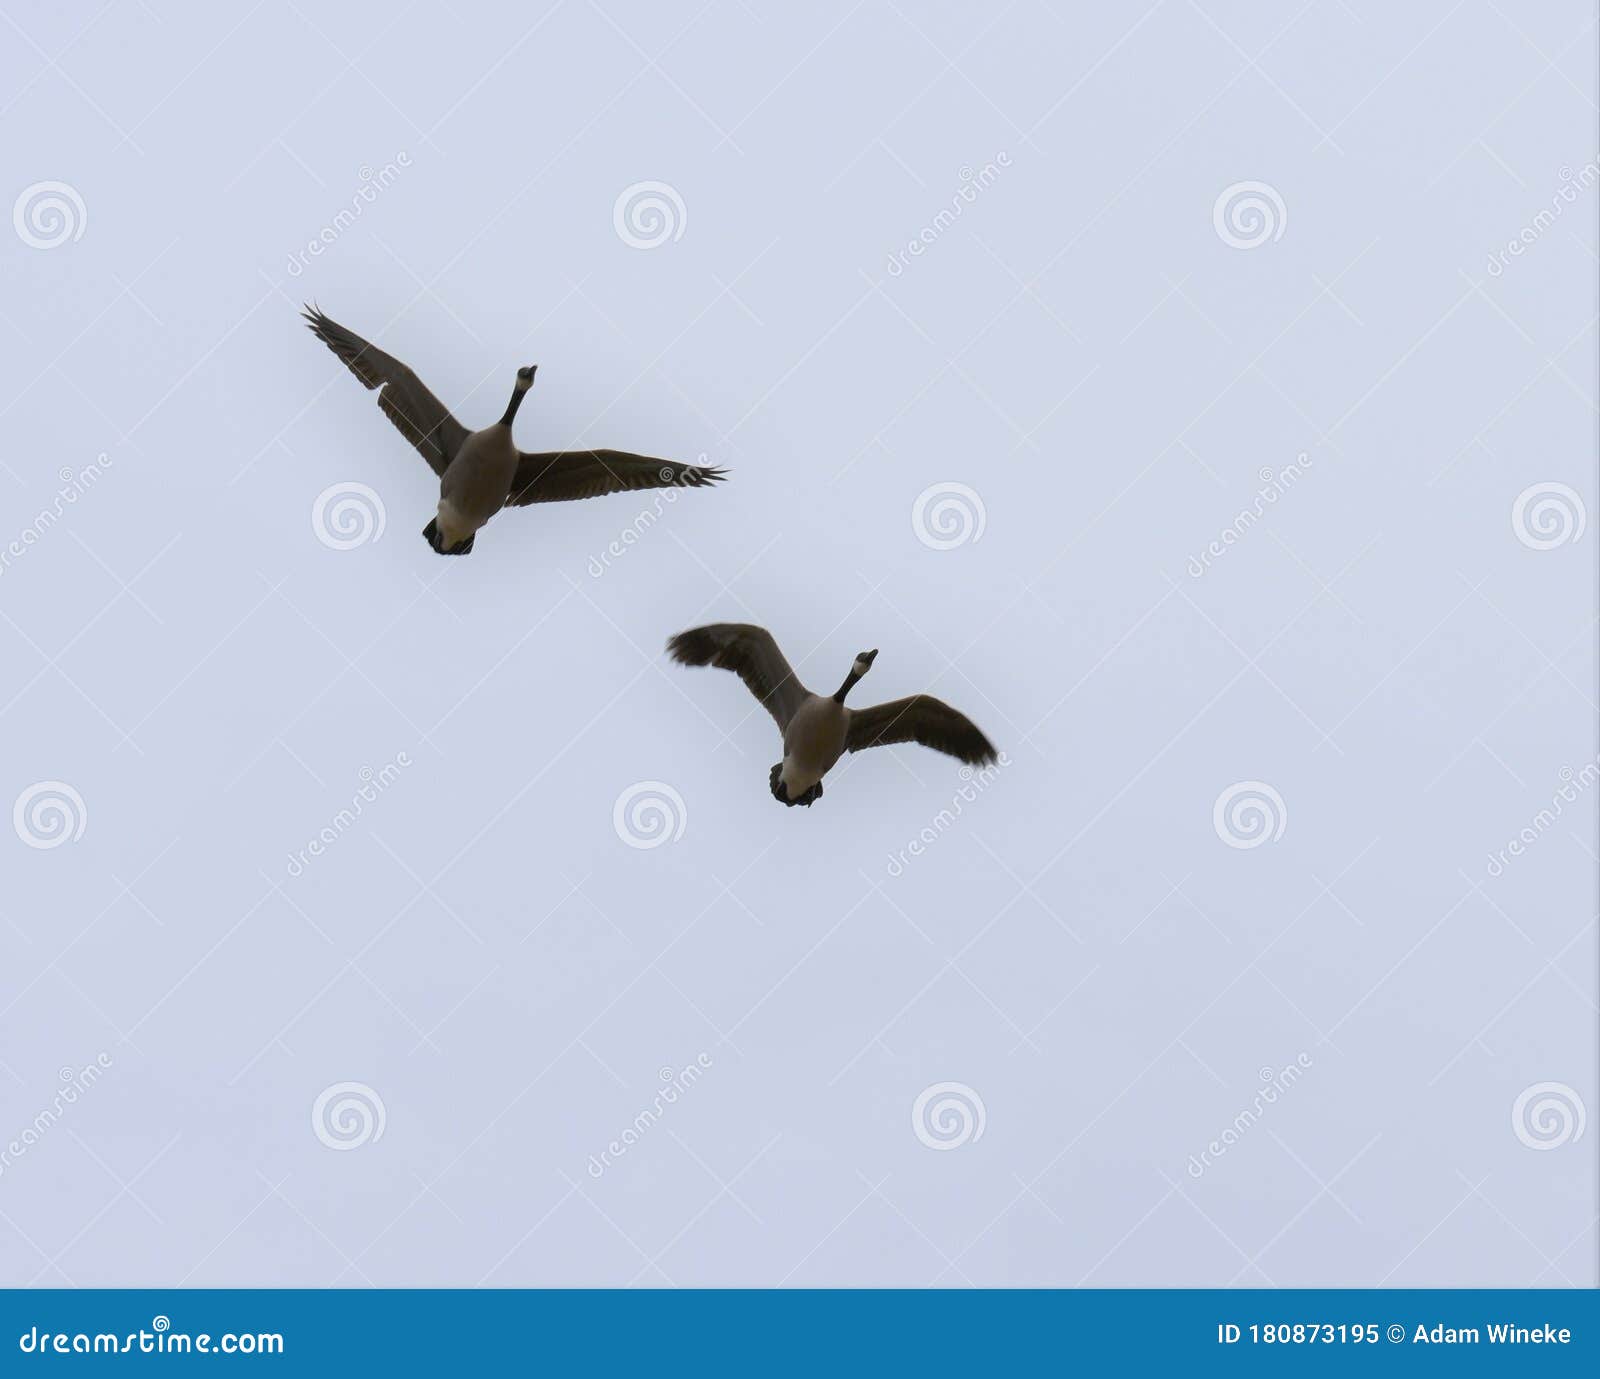 pair of canadian geese take flight